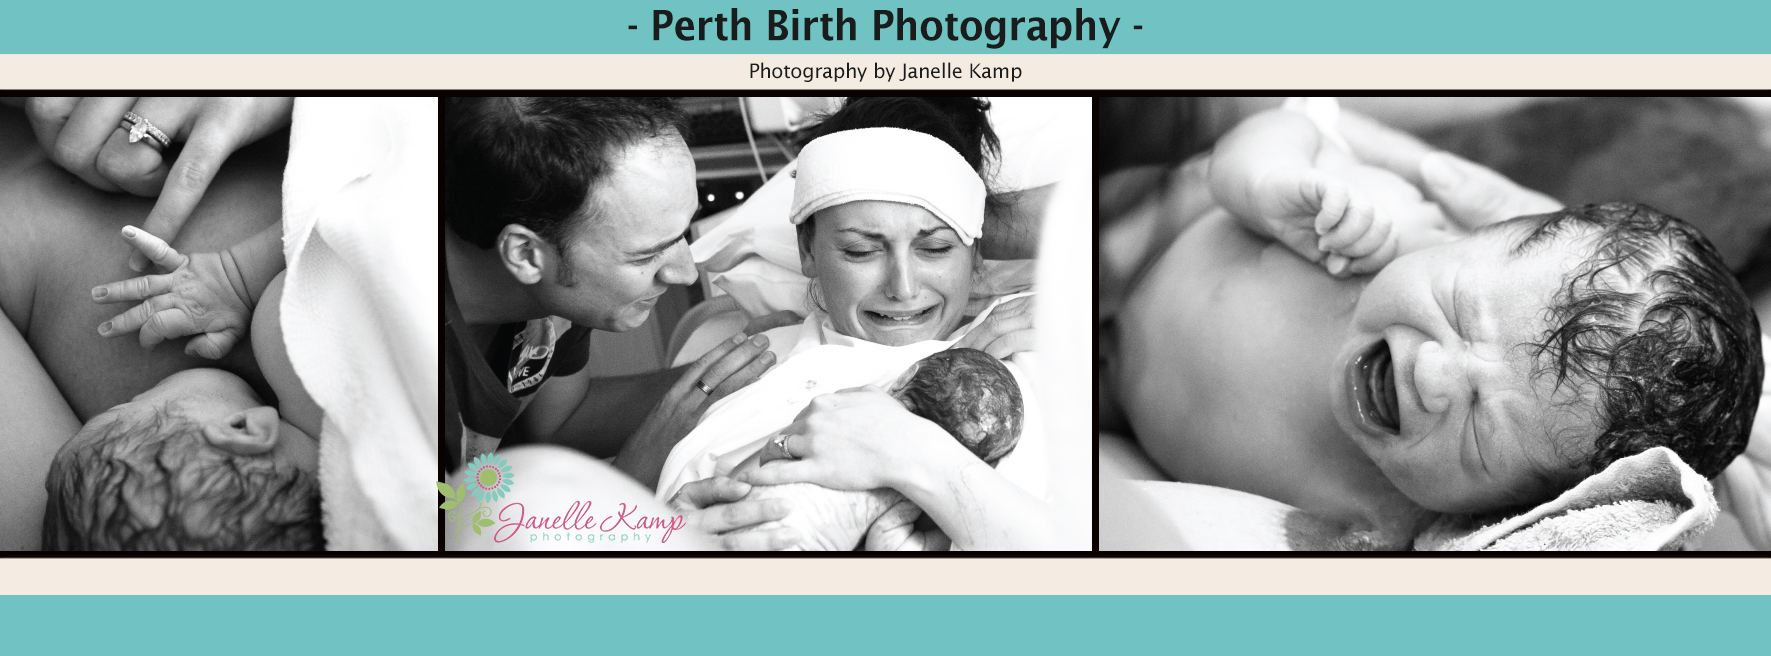 Perth Birth Photography